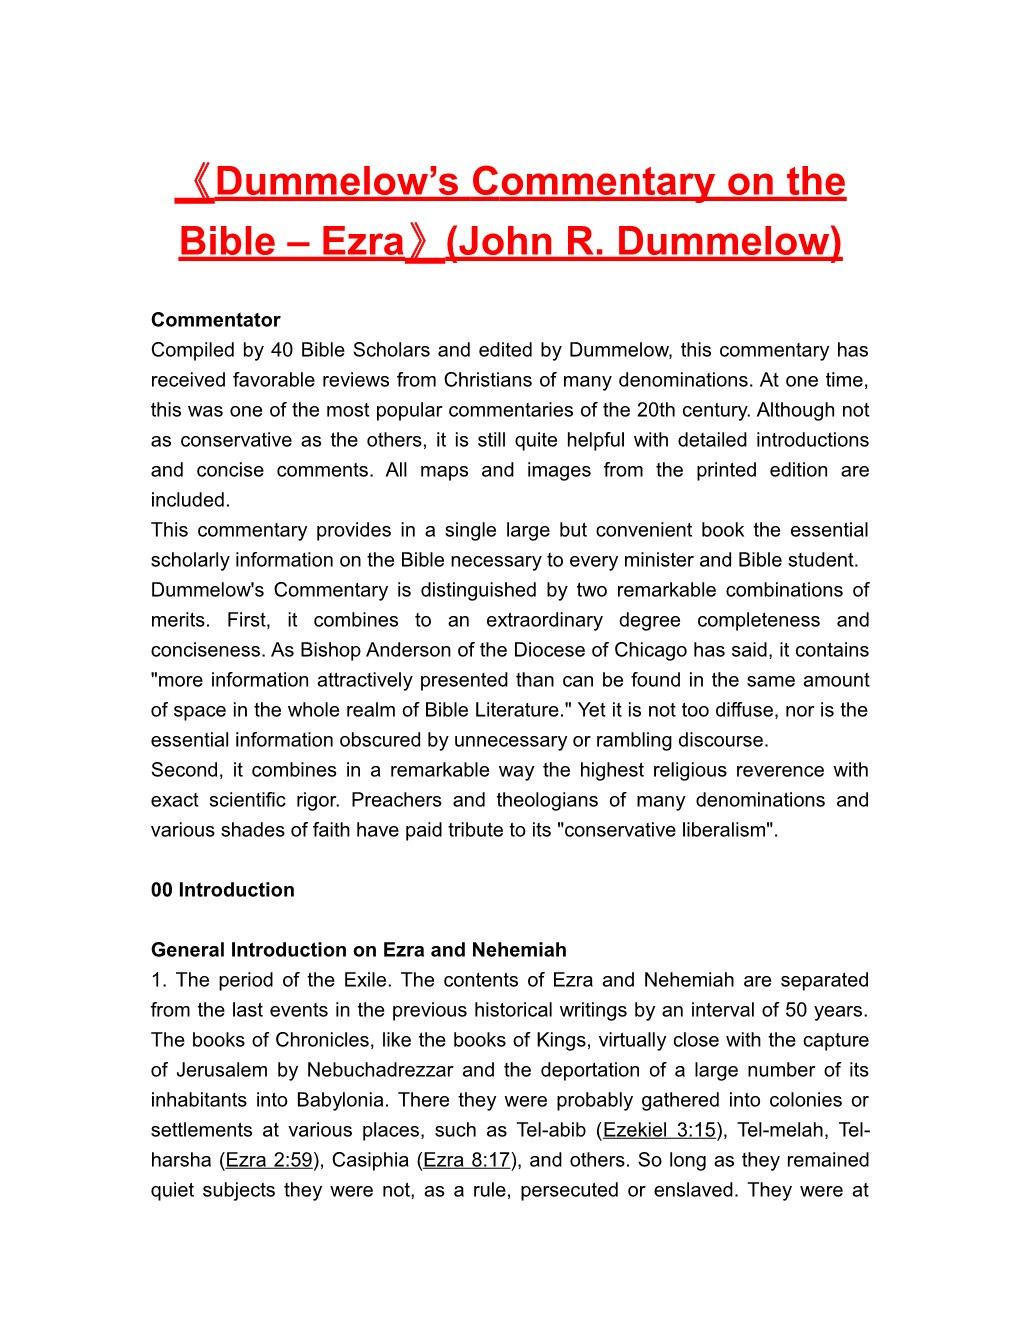 Dummelow Scommentaryon the Bible Ezra (John R. Dummelow)